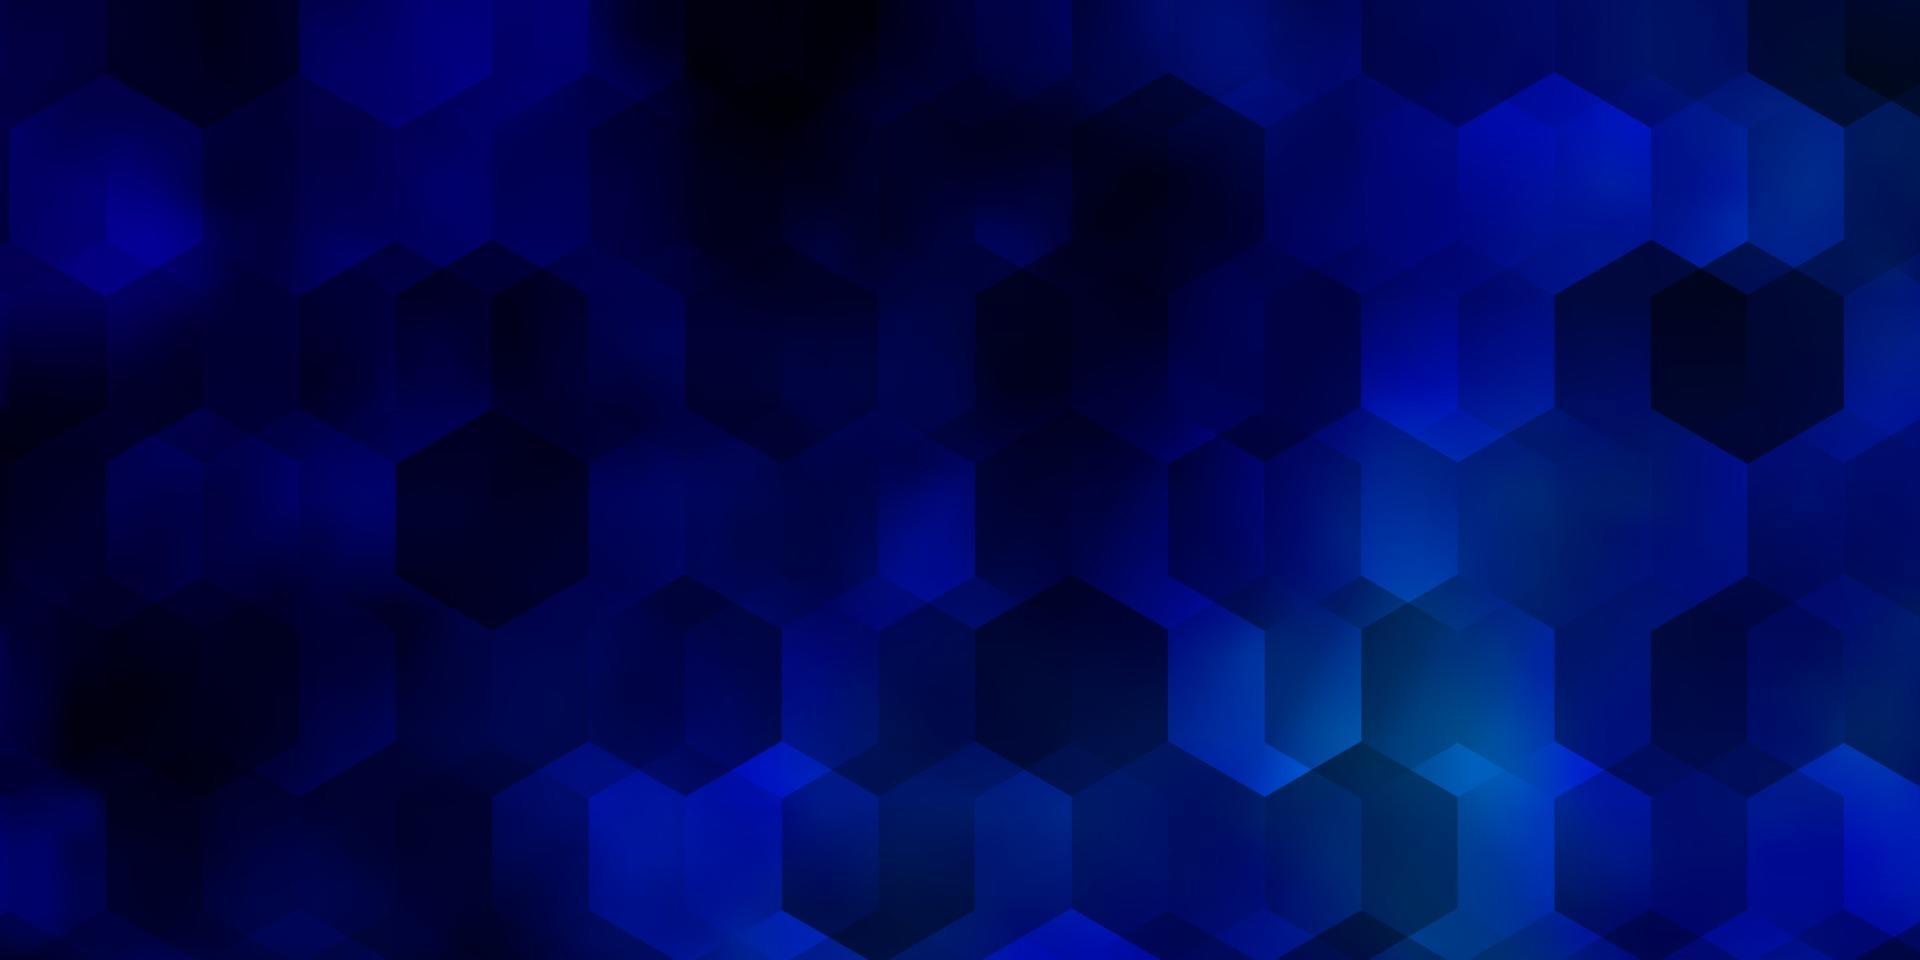 layout de vetor azul claro com formas hexagonais.